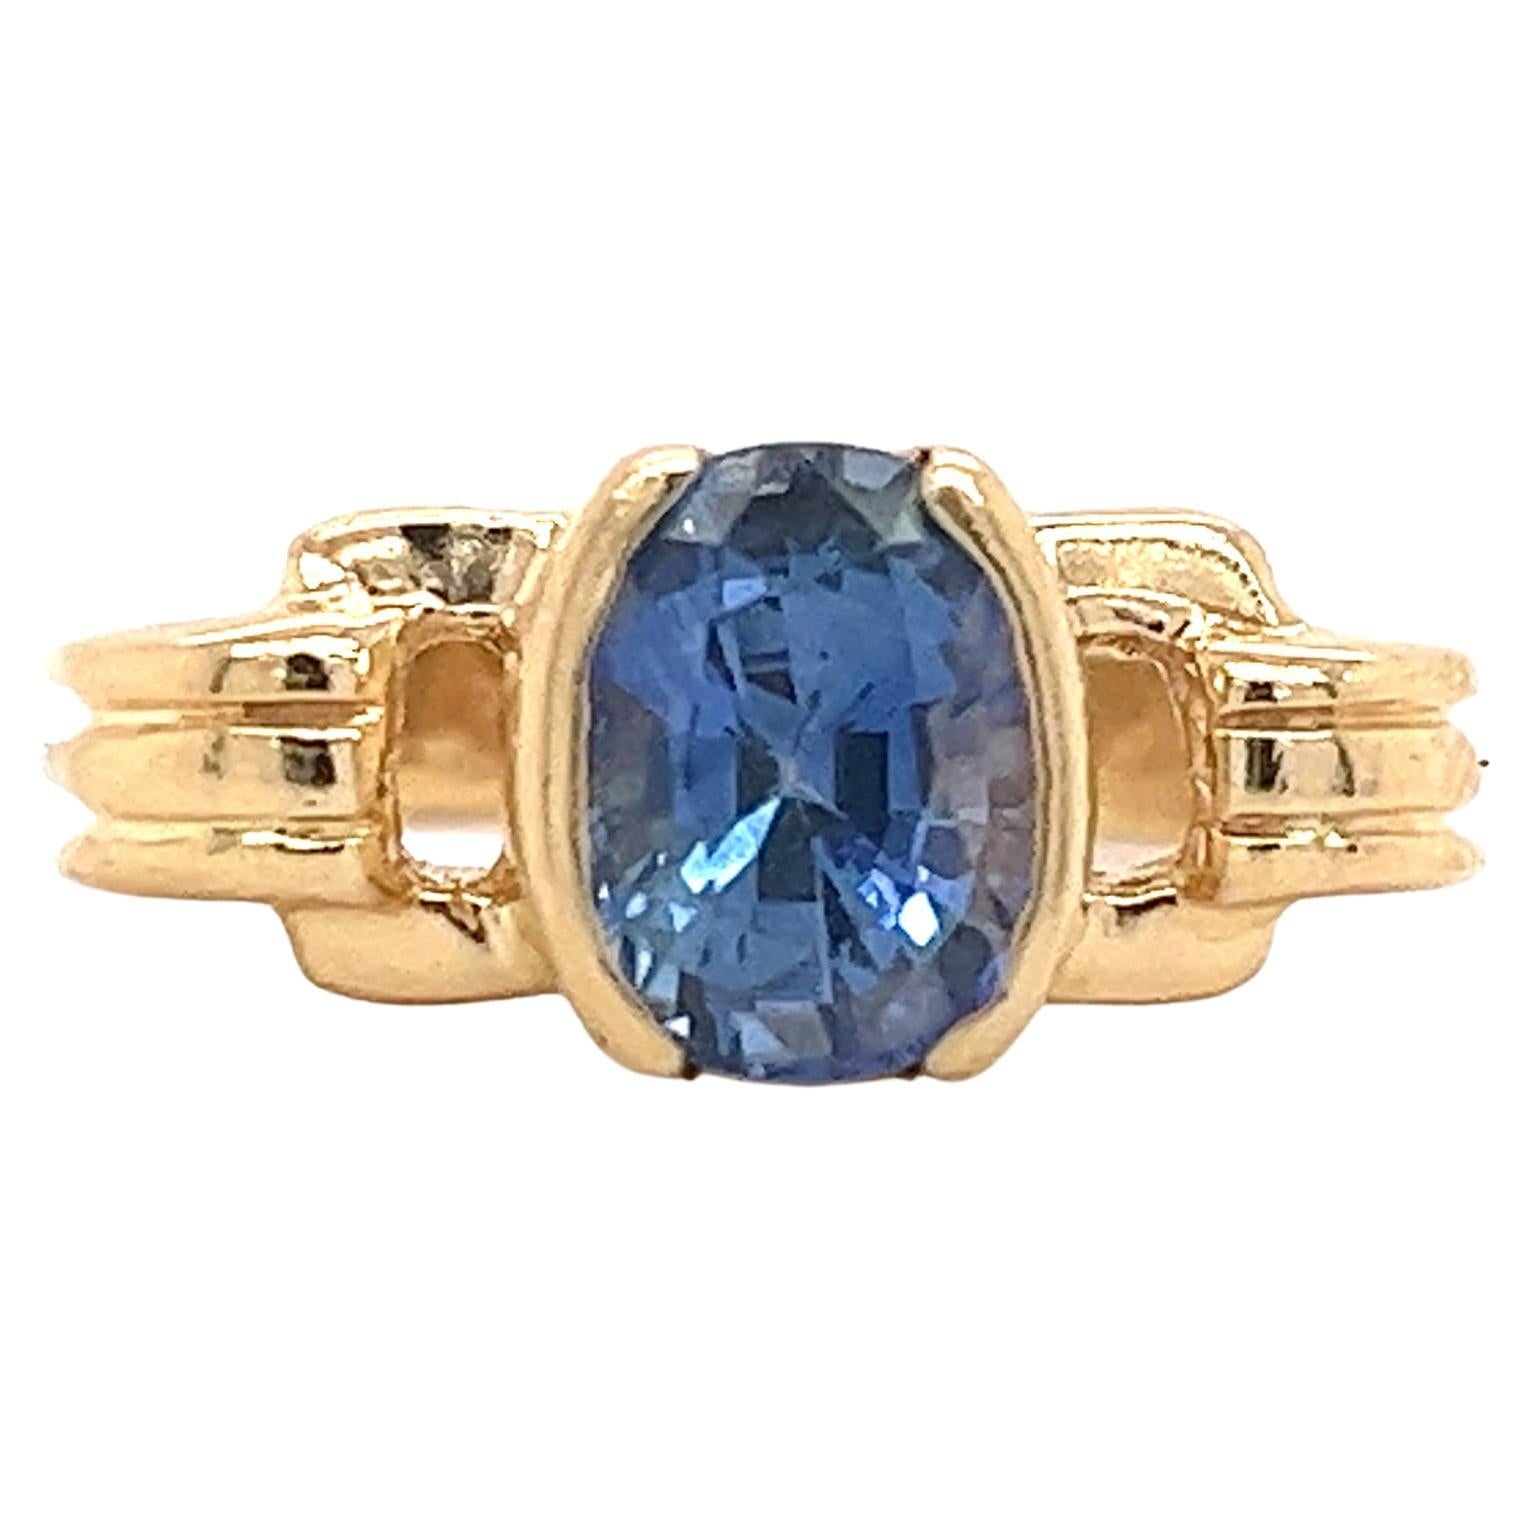 Halb Lünette Set 2 Karat Oval Blauer Saphir Vintage Ring in 14k Gold